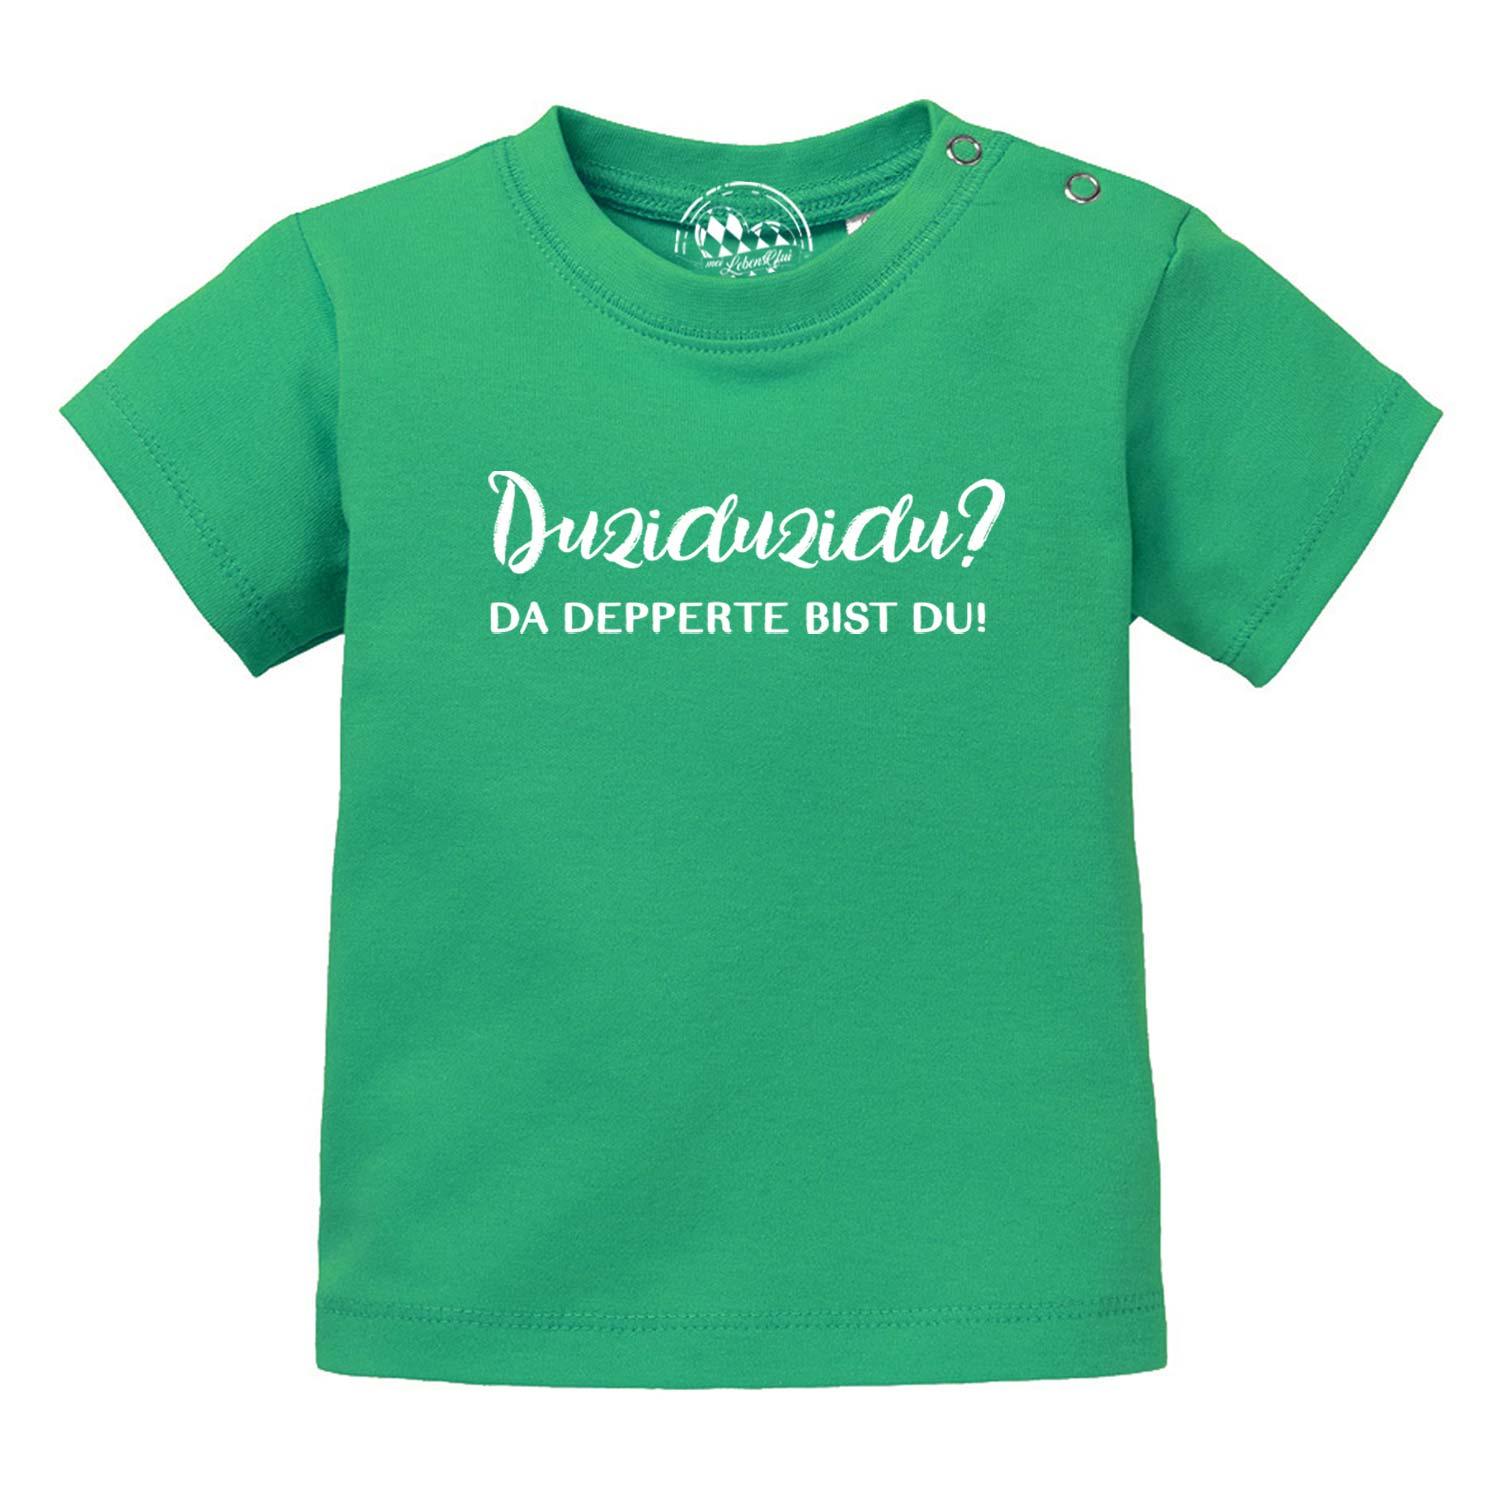 Baby T-Shirt "Duziduzidu…" - bavariashop - mei LebensGfui